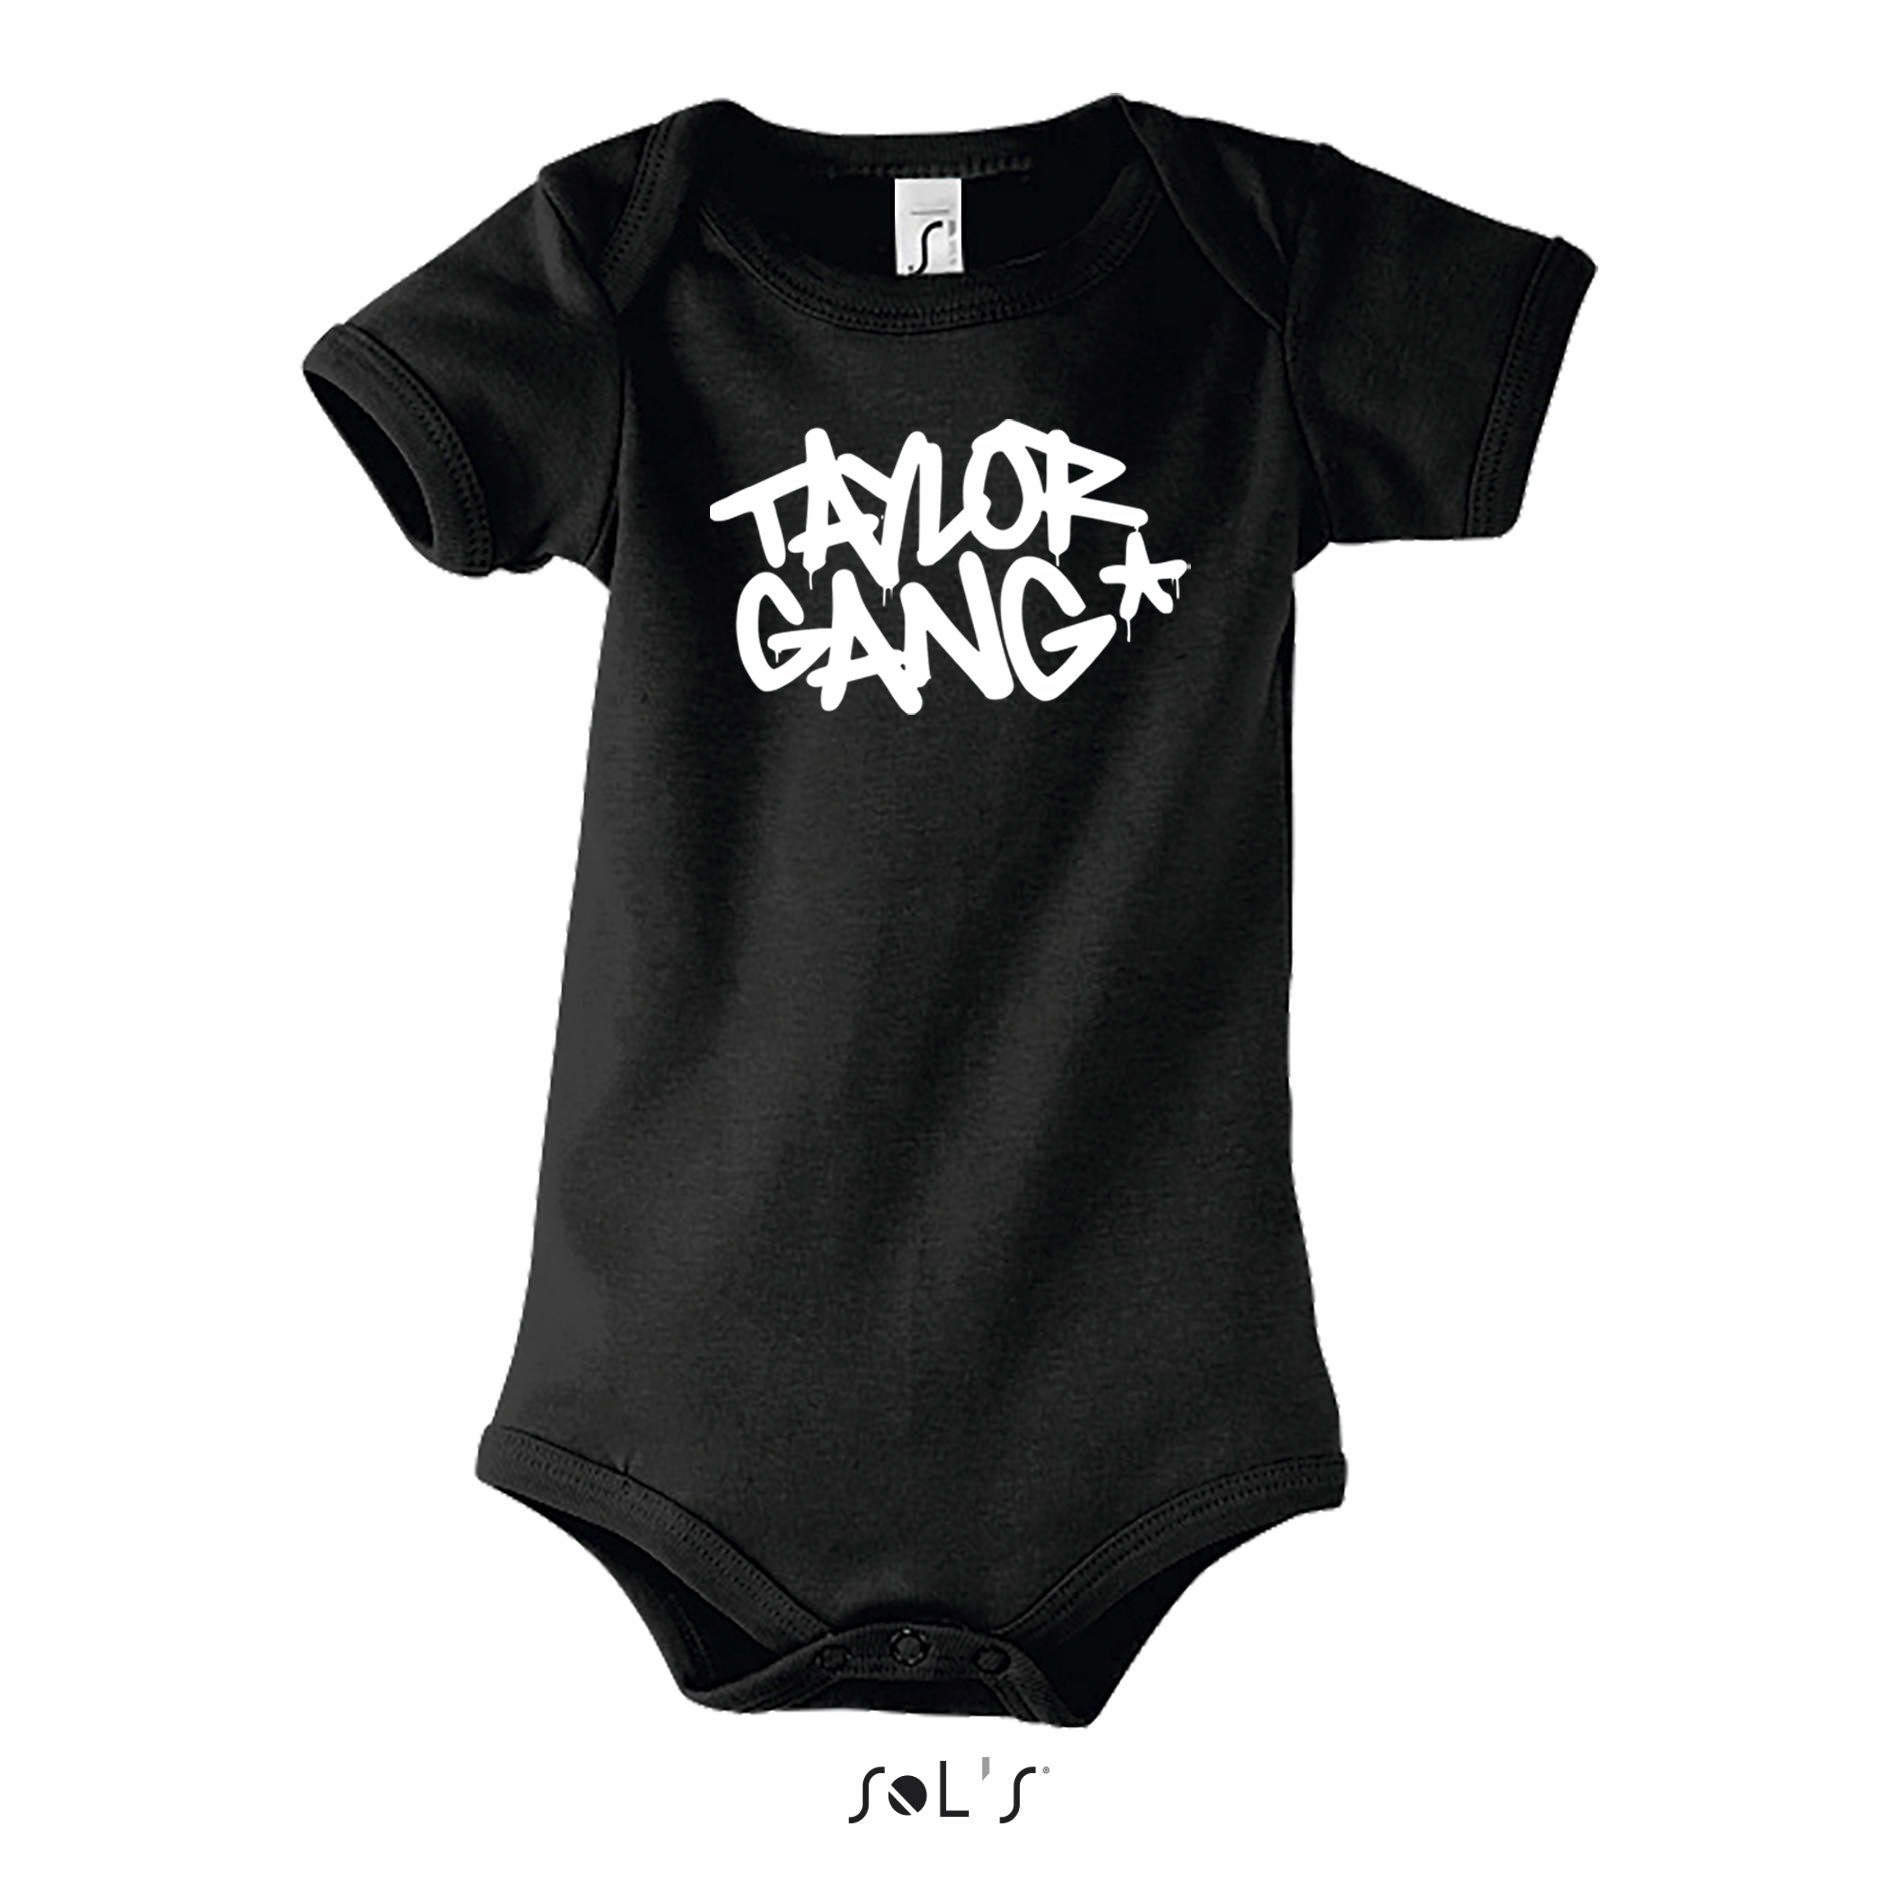 Blondie & Brownie Strampler Baby Strampler Body Shirt Taylor Gang Stern Wiz Rapper Khalifa Schwarz